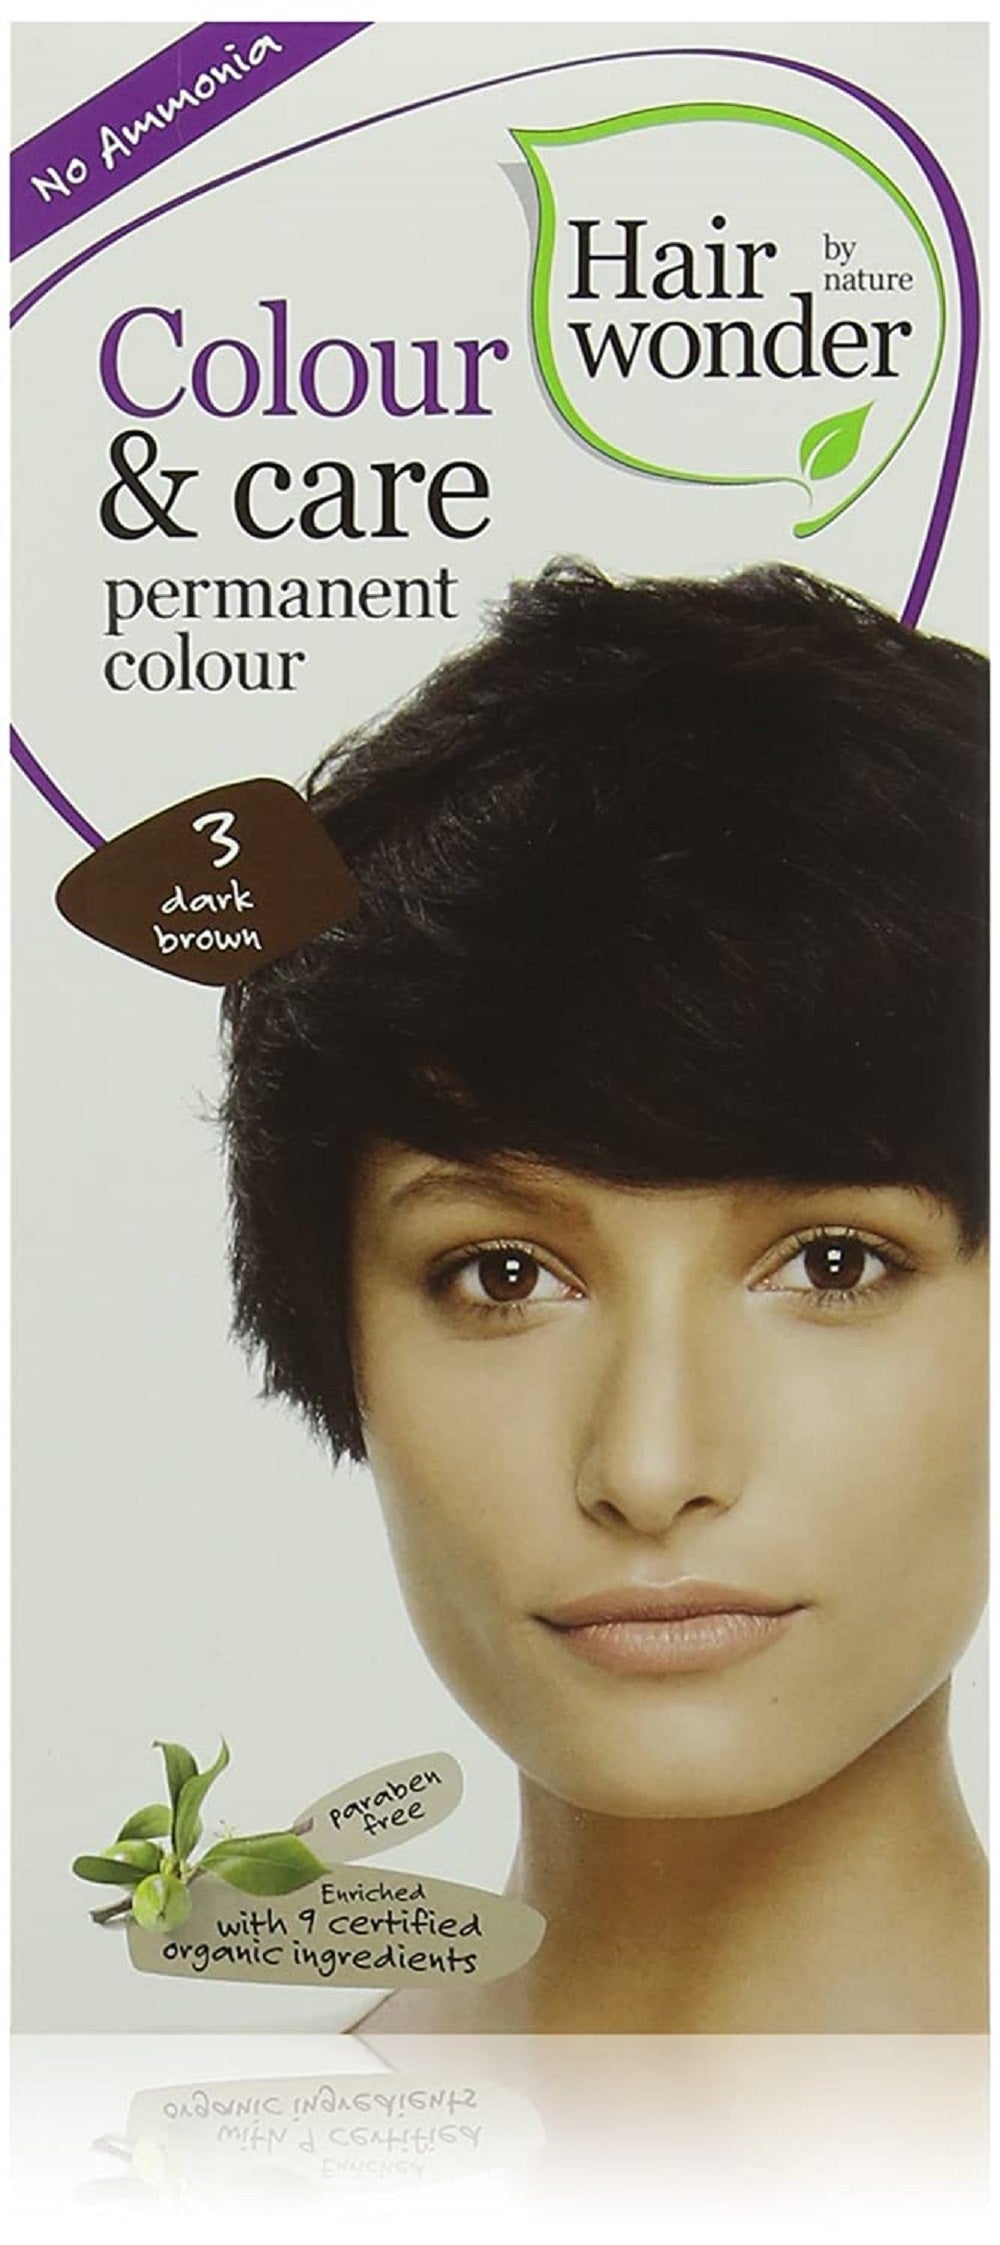 Hair Wonder by nature Colour & Care 3 Dark Brown permanent Colour AMMONIA FREE